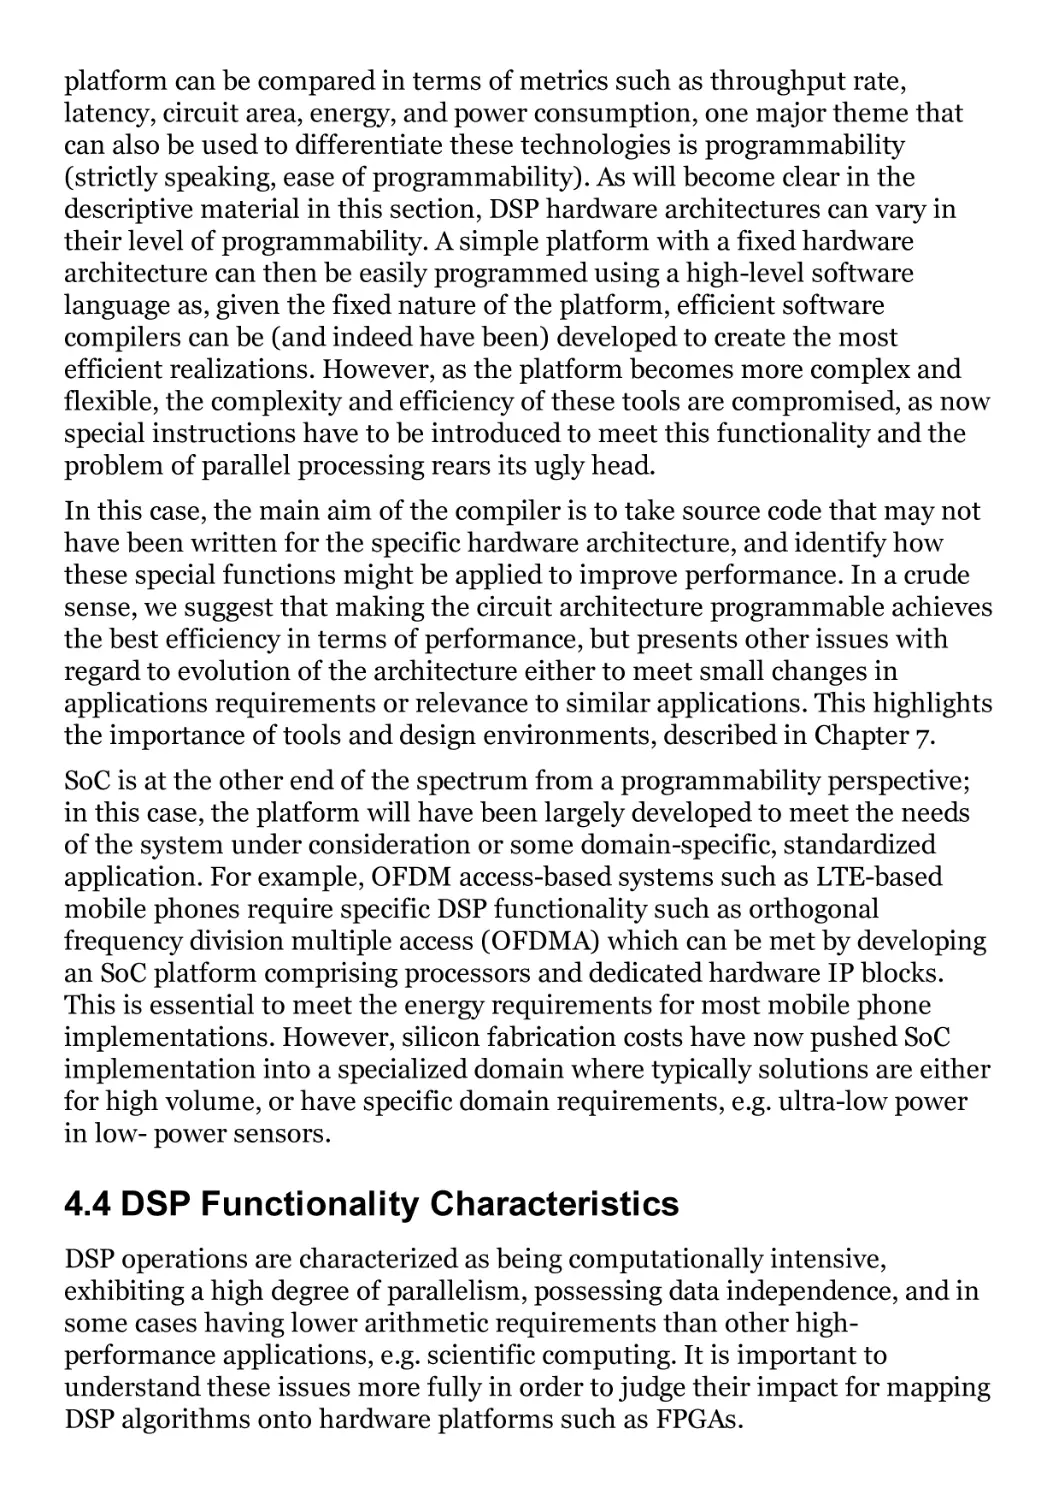 4.4 DSP Functionality Characteristics